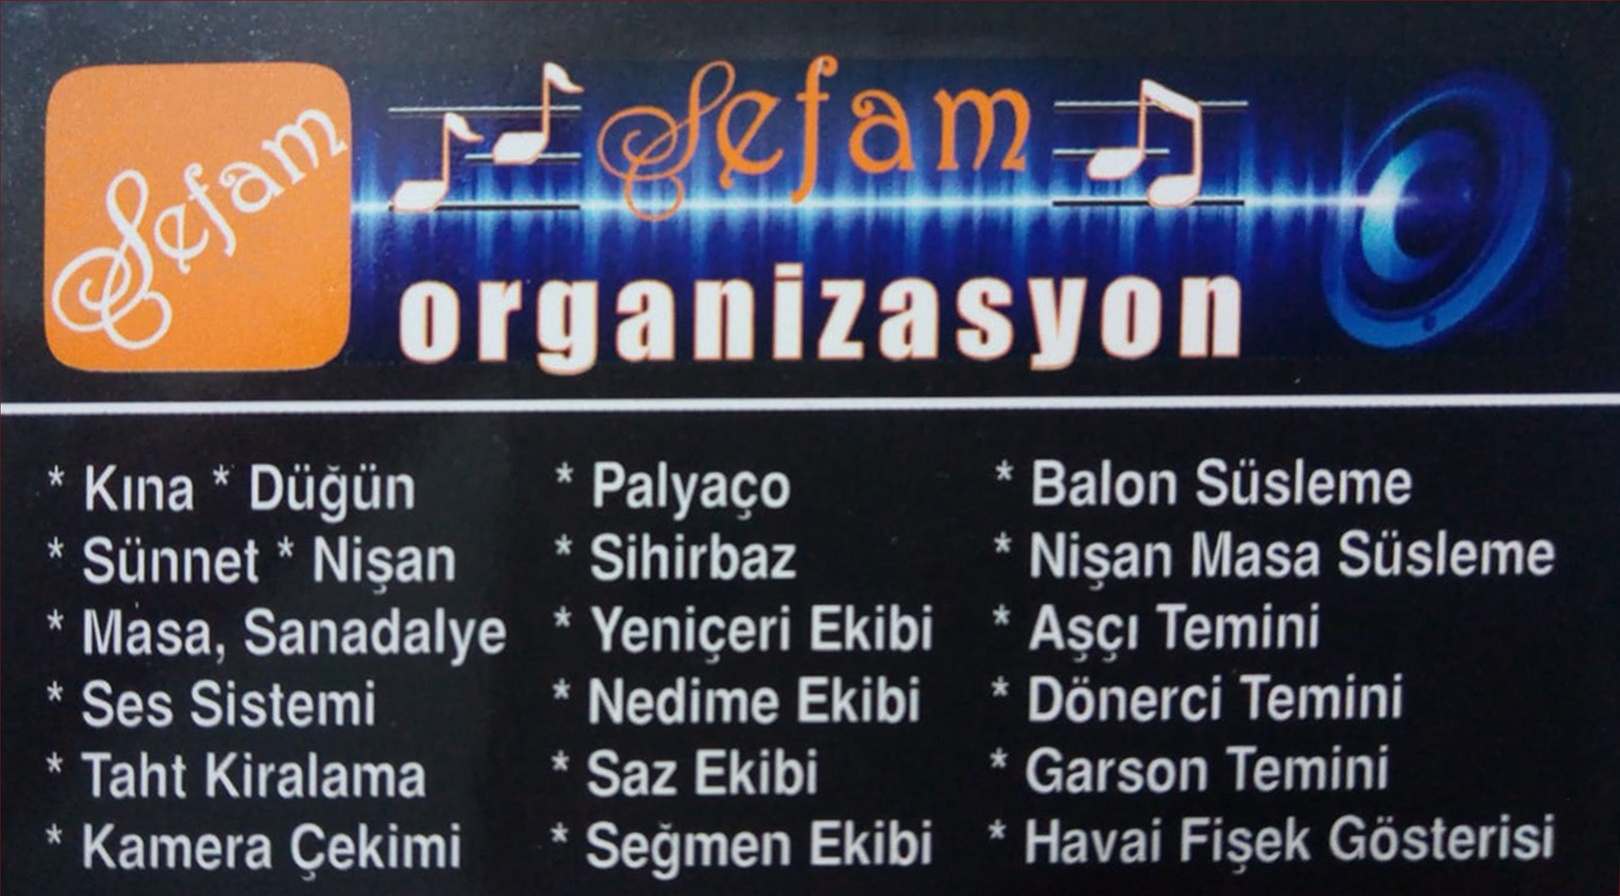 Ankara Kalecik Sefam Organizasyon Ankara 0536 474 94 46 - 0552 474 94 46